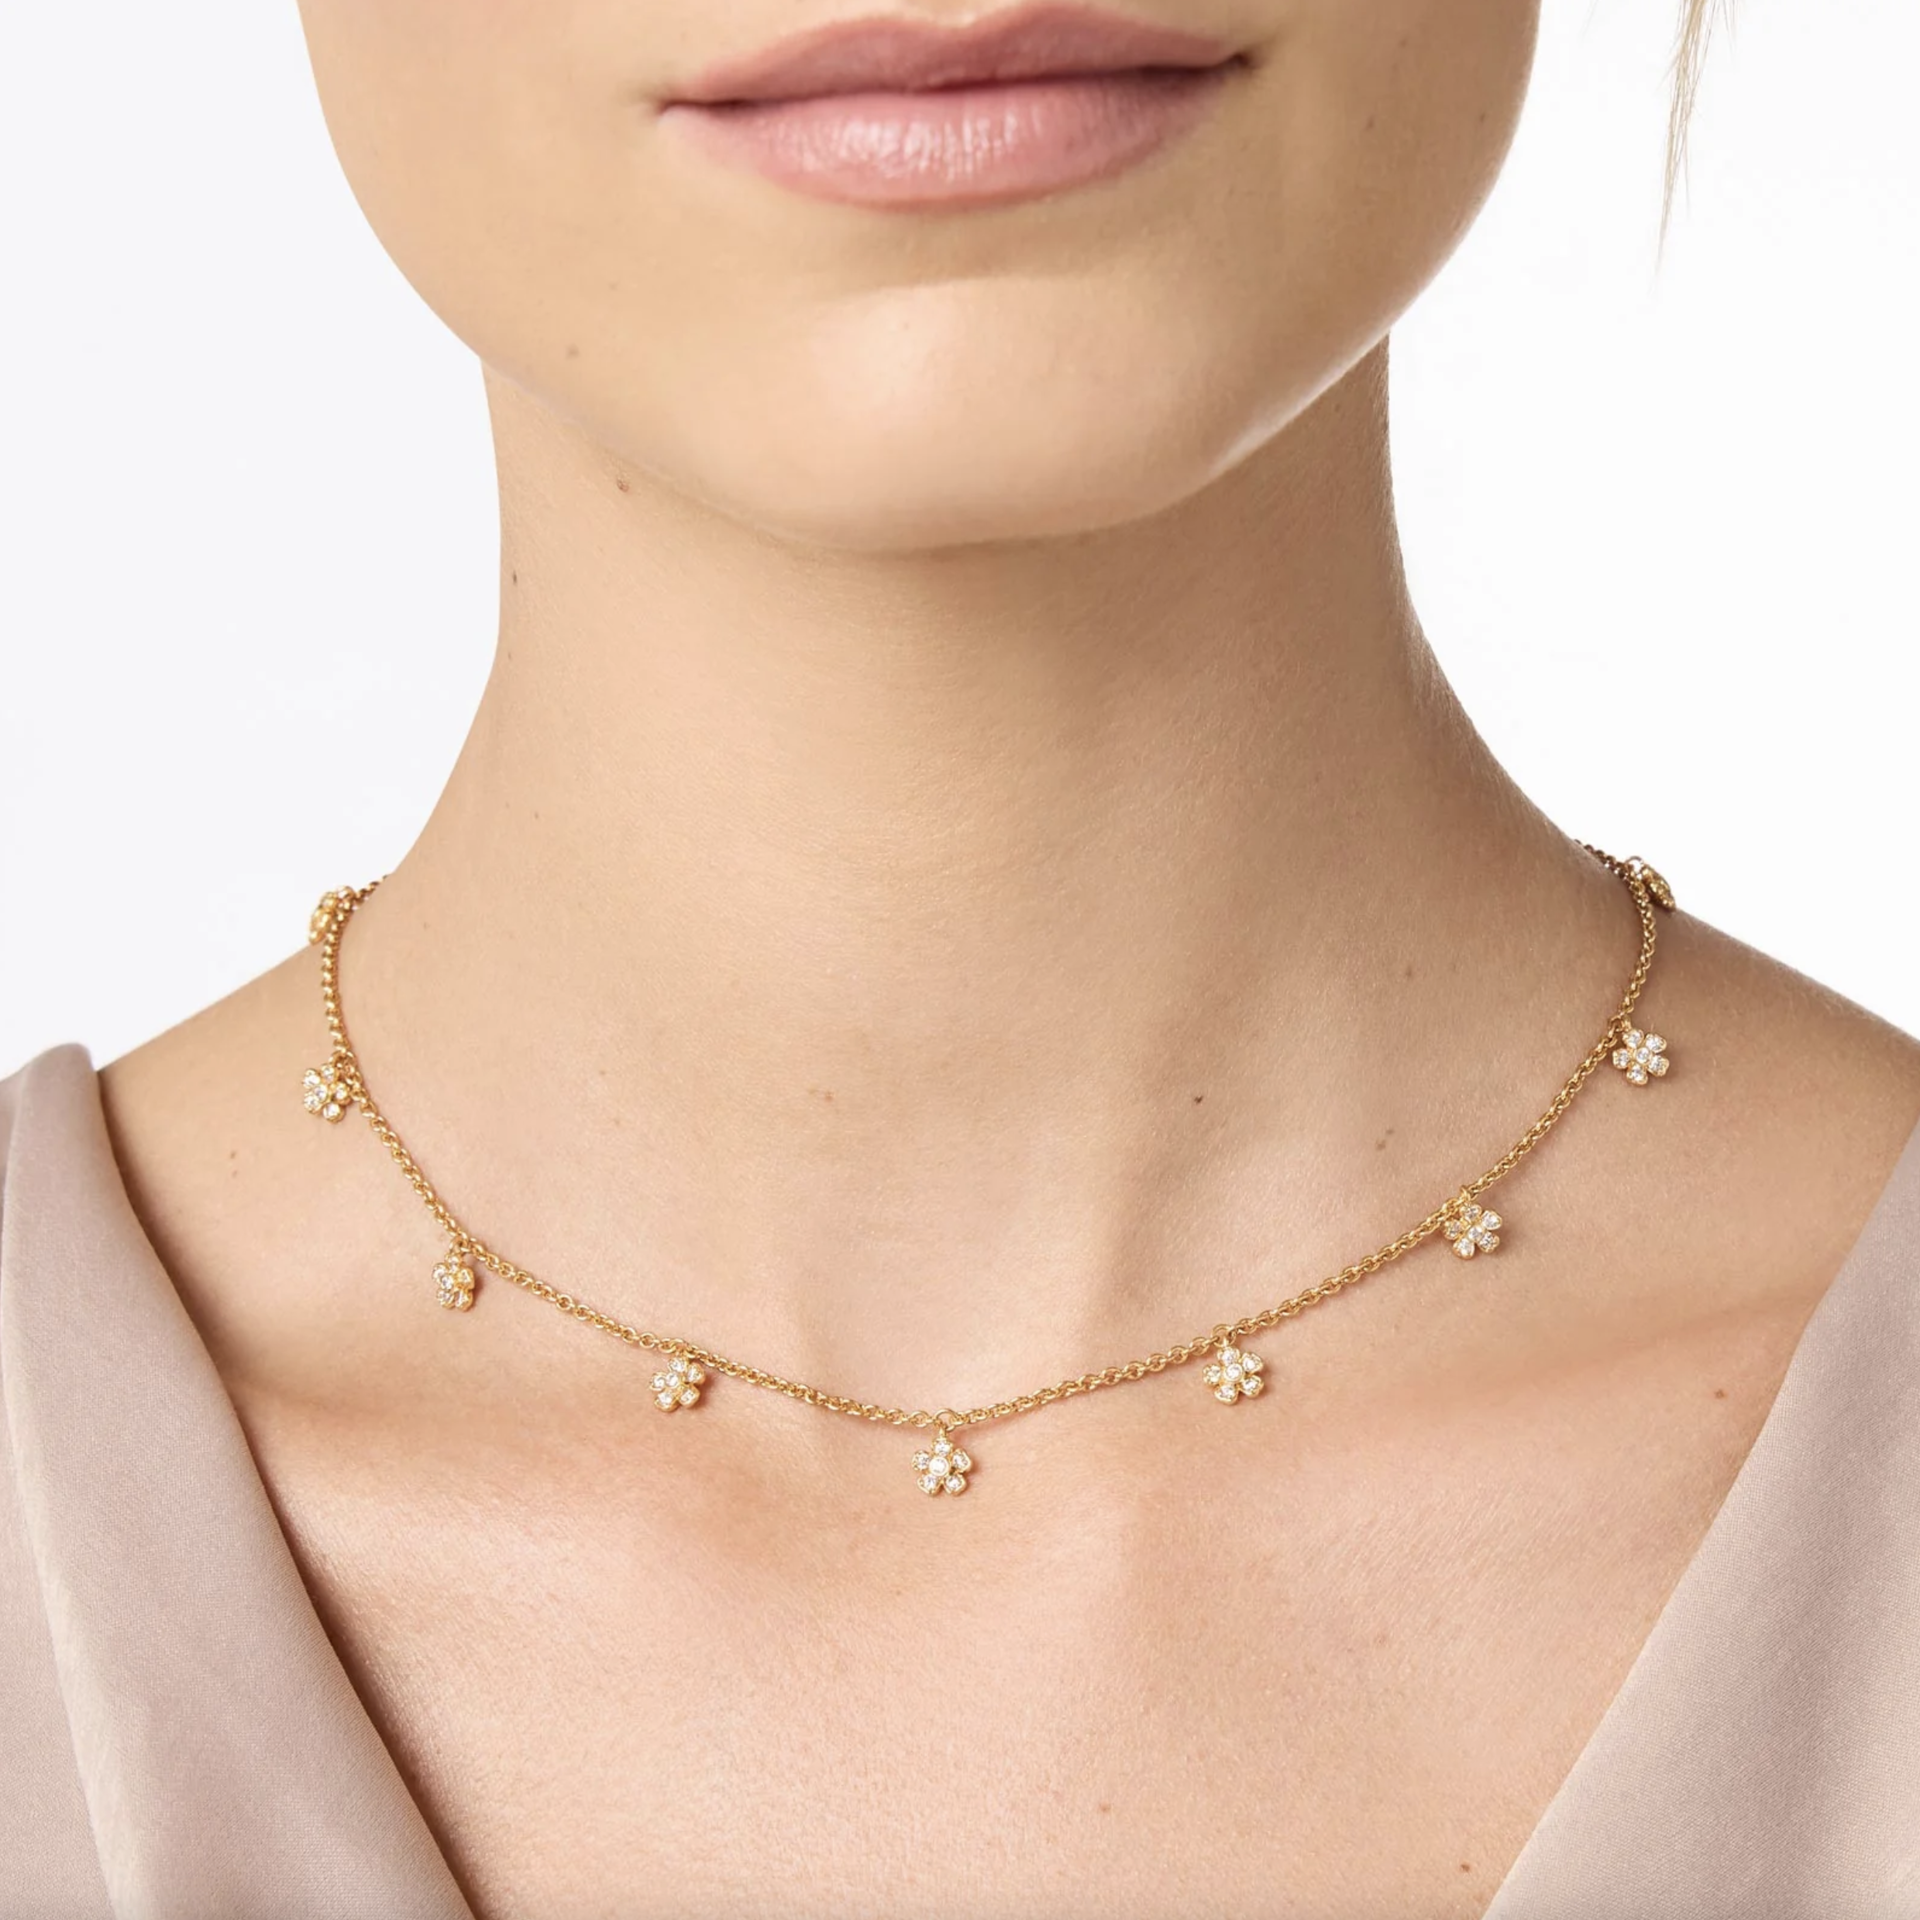 Laurel Delicate Charm Necklace by Julie Vos